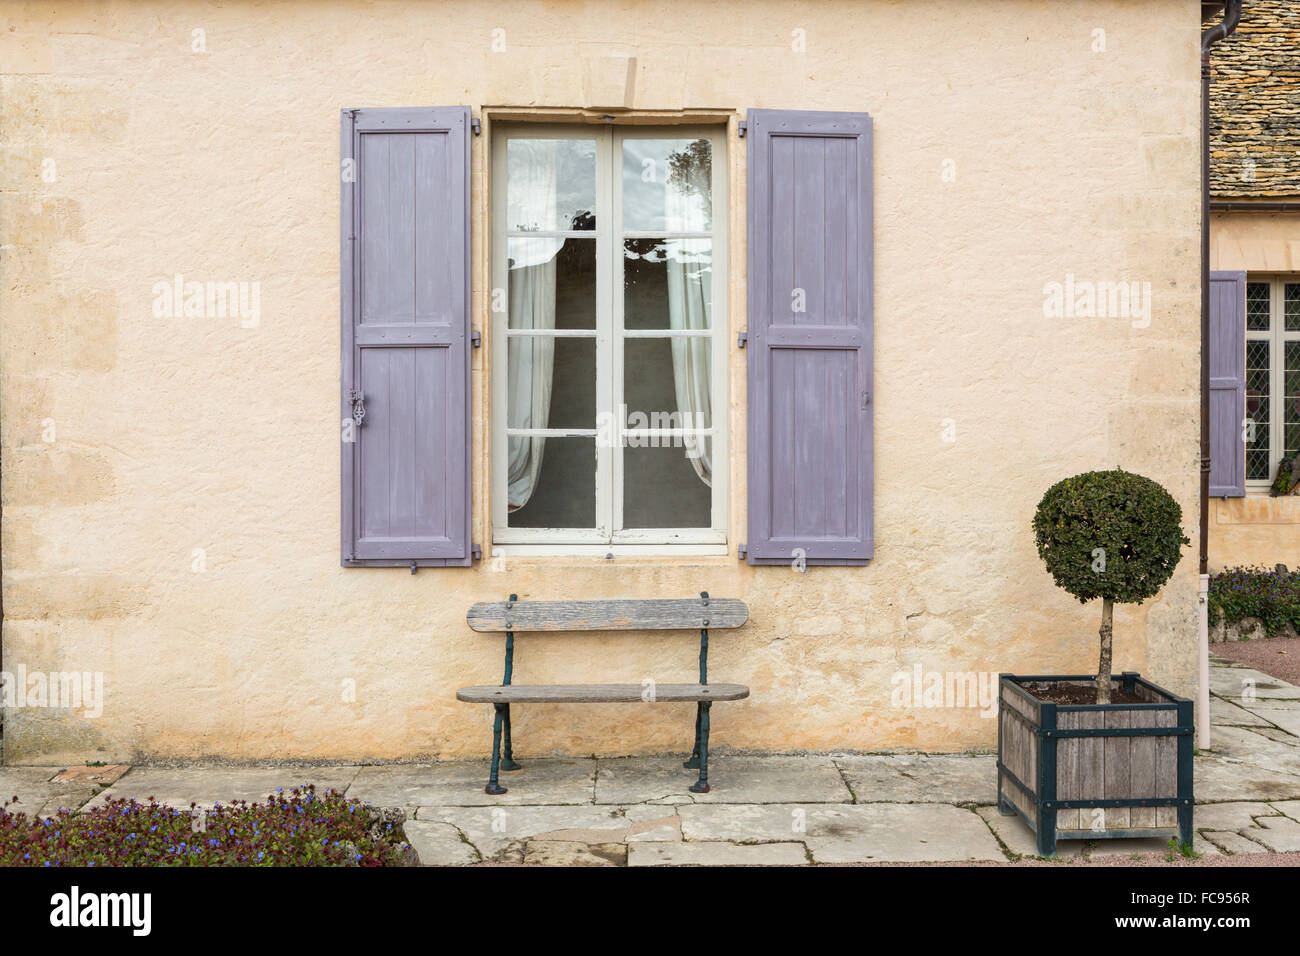 Marqueyssac Chateau and Gardens, Vezac, Dordogne, France Stock Photo